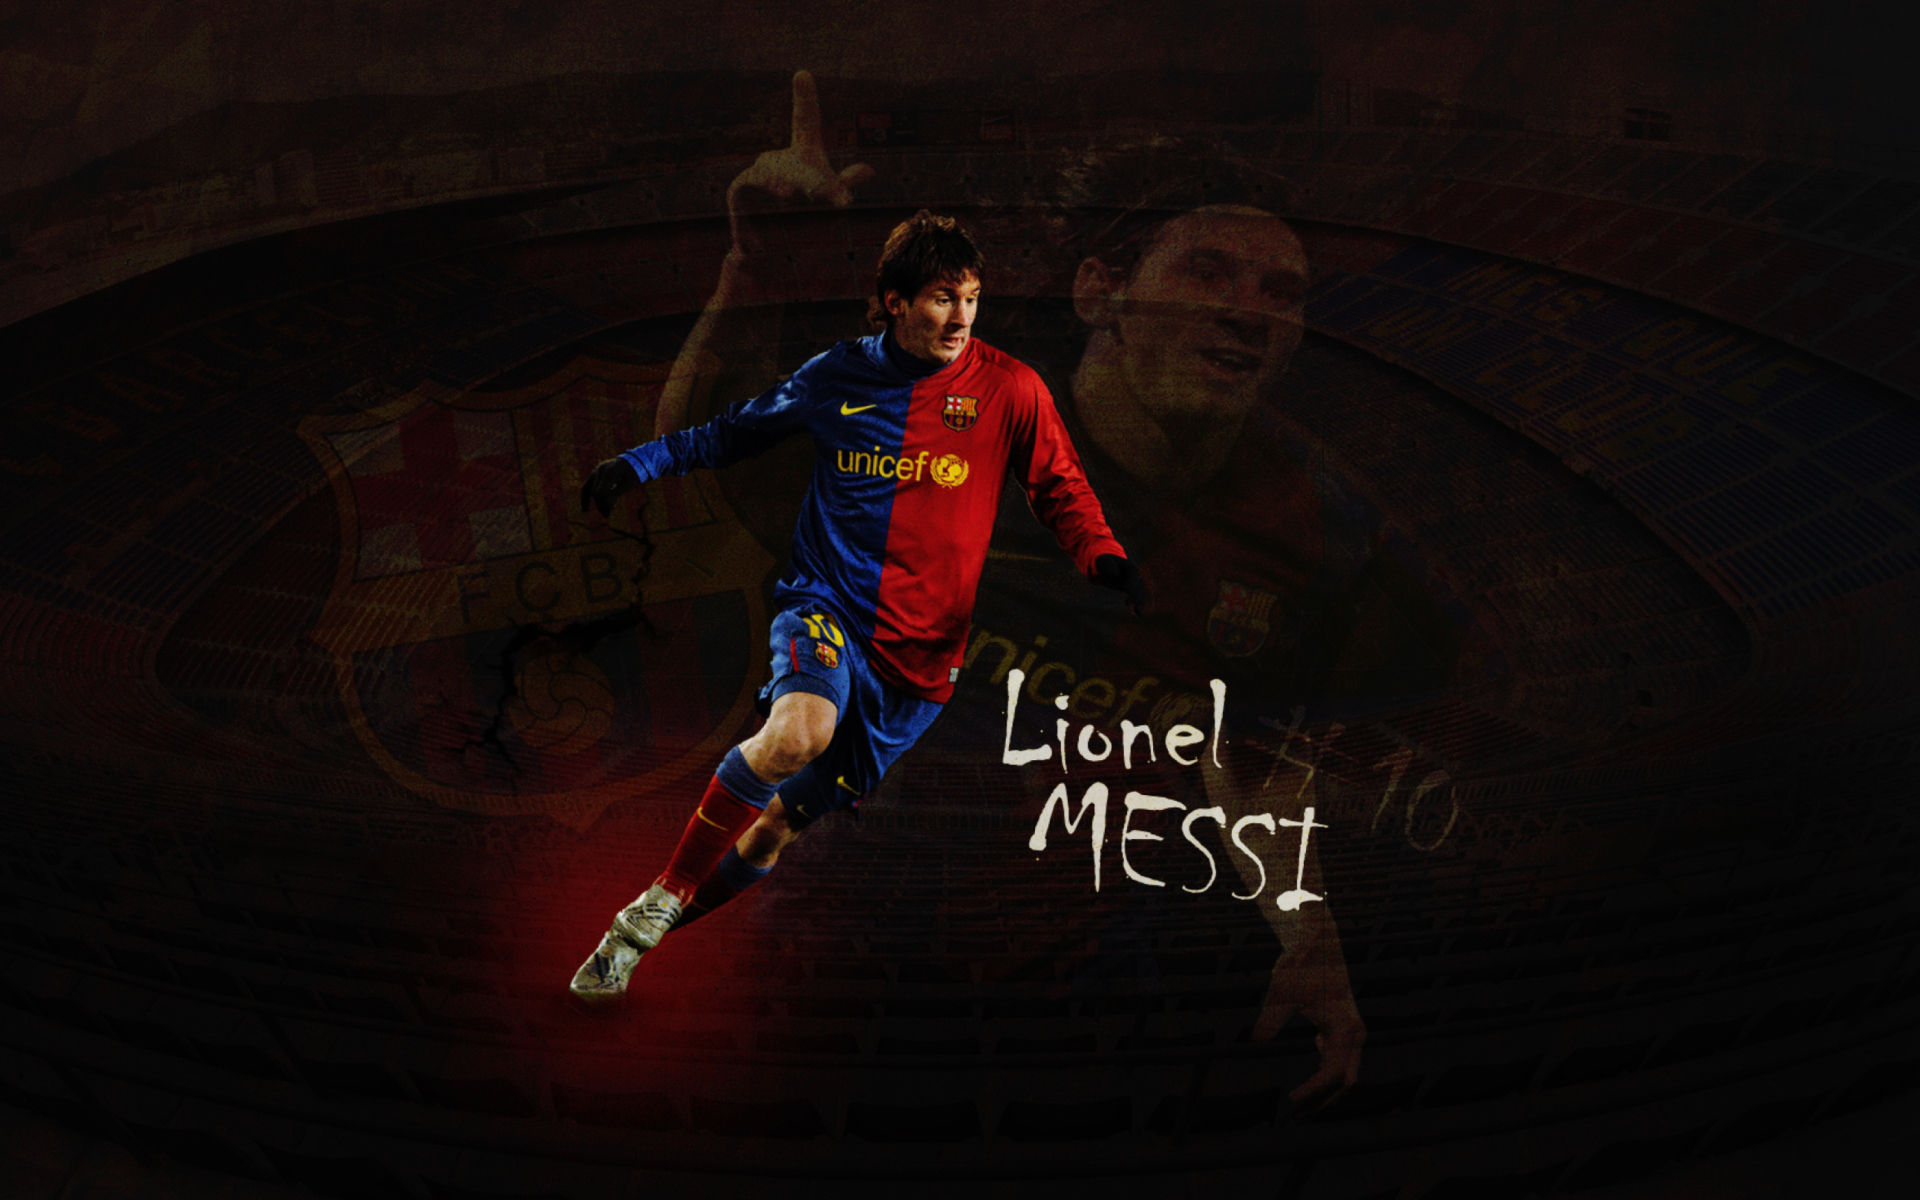 Lionel Messi Wallpaper for Widescreen Desktop PC 1920x1080 Full HD